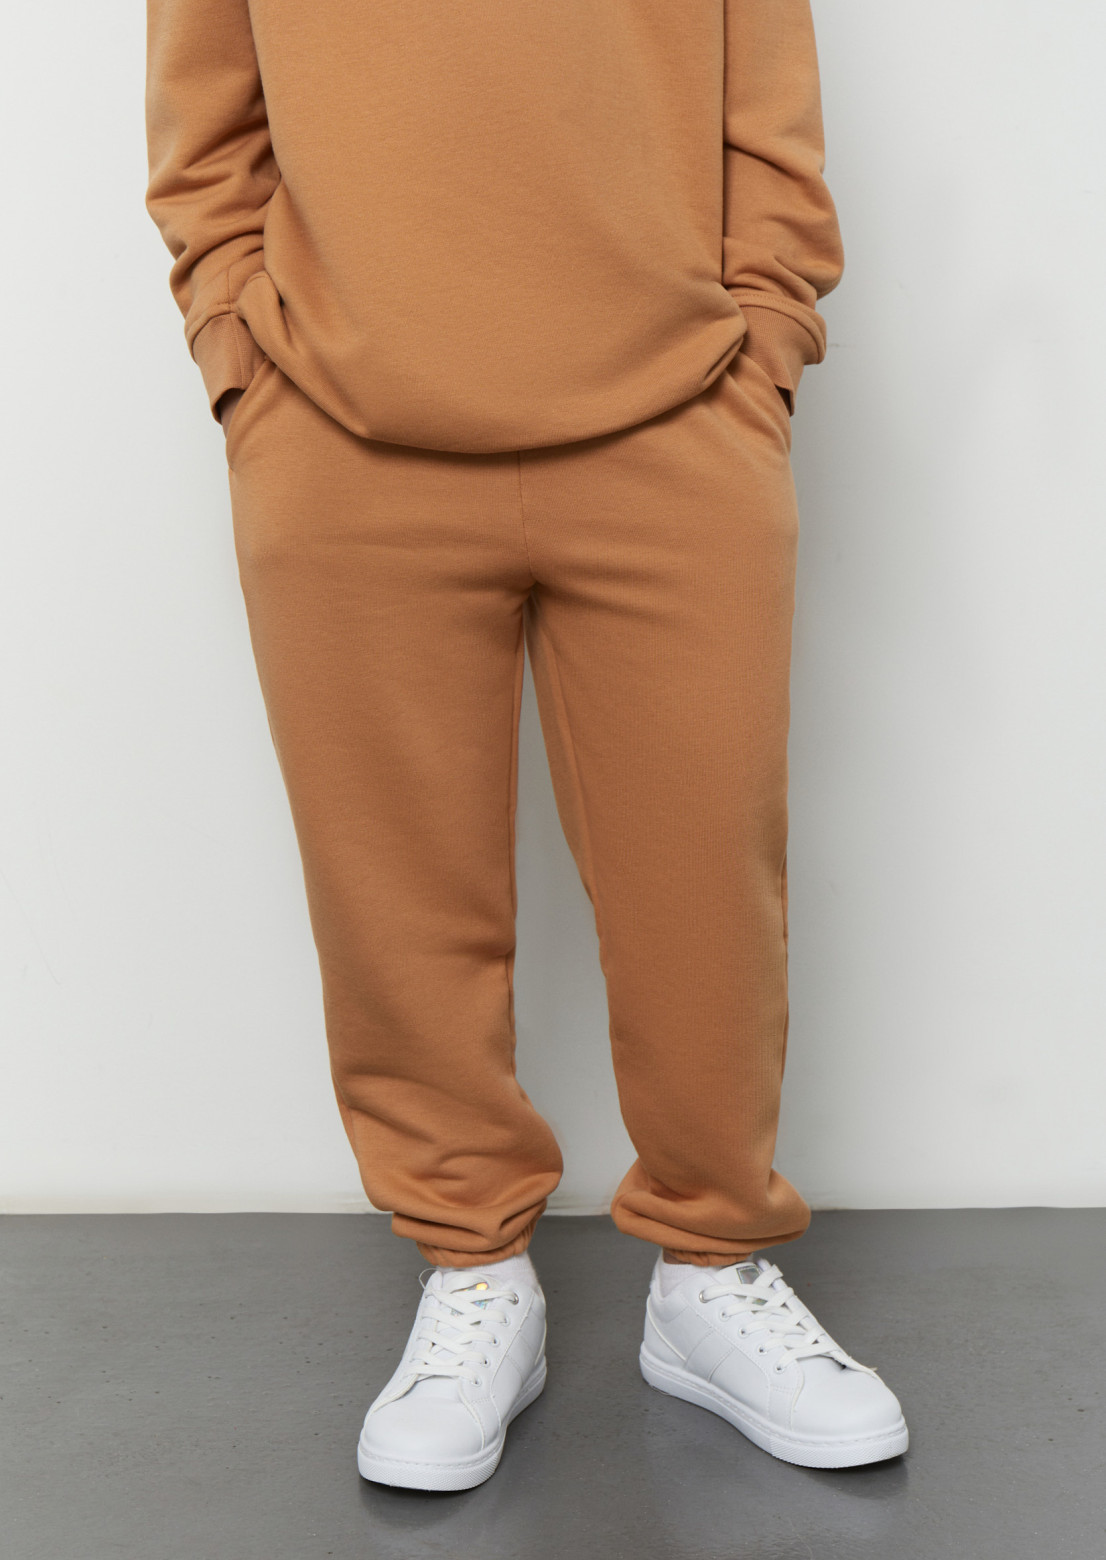 Orange Women's Pants: Shop up to −88%